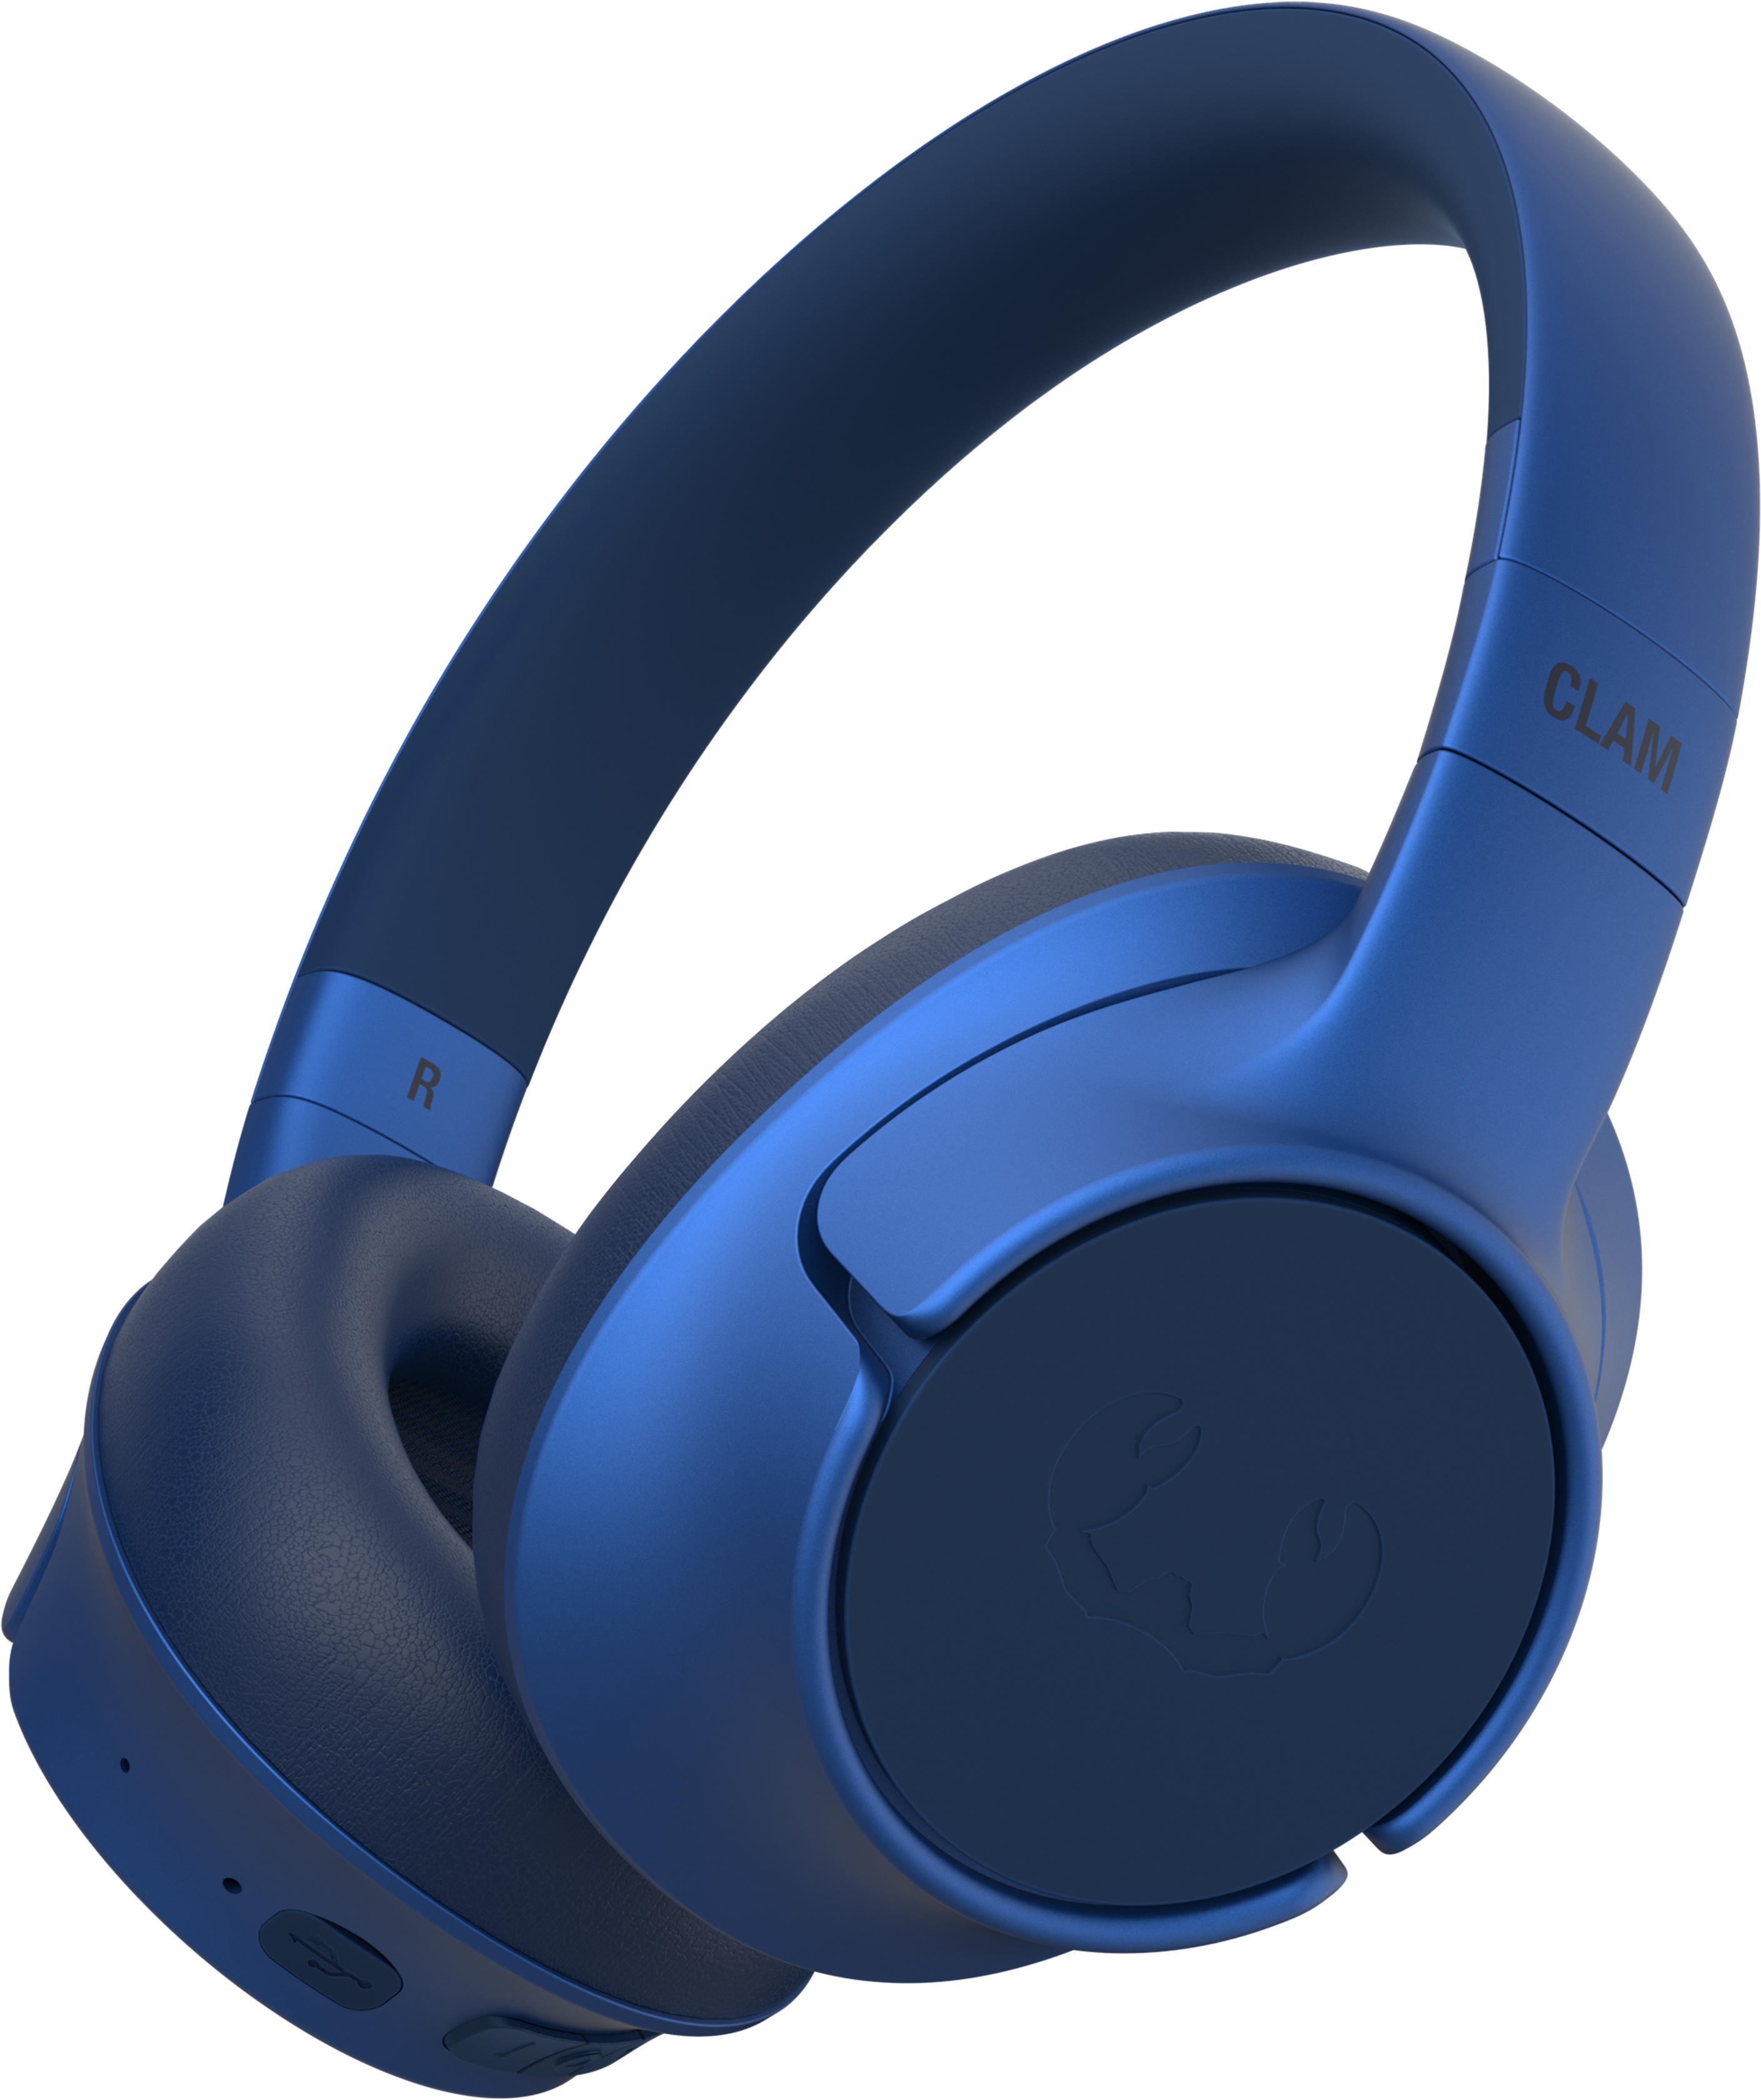 FRESH'N REBEL Clam Fuse - Wless over-ear 3HP3300TB True Blue with Hybrid ANC